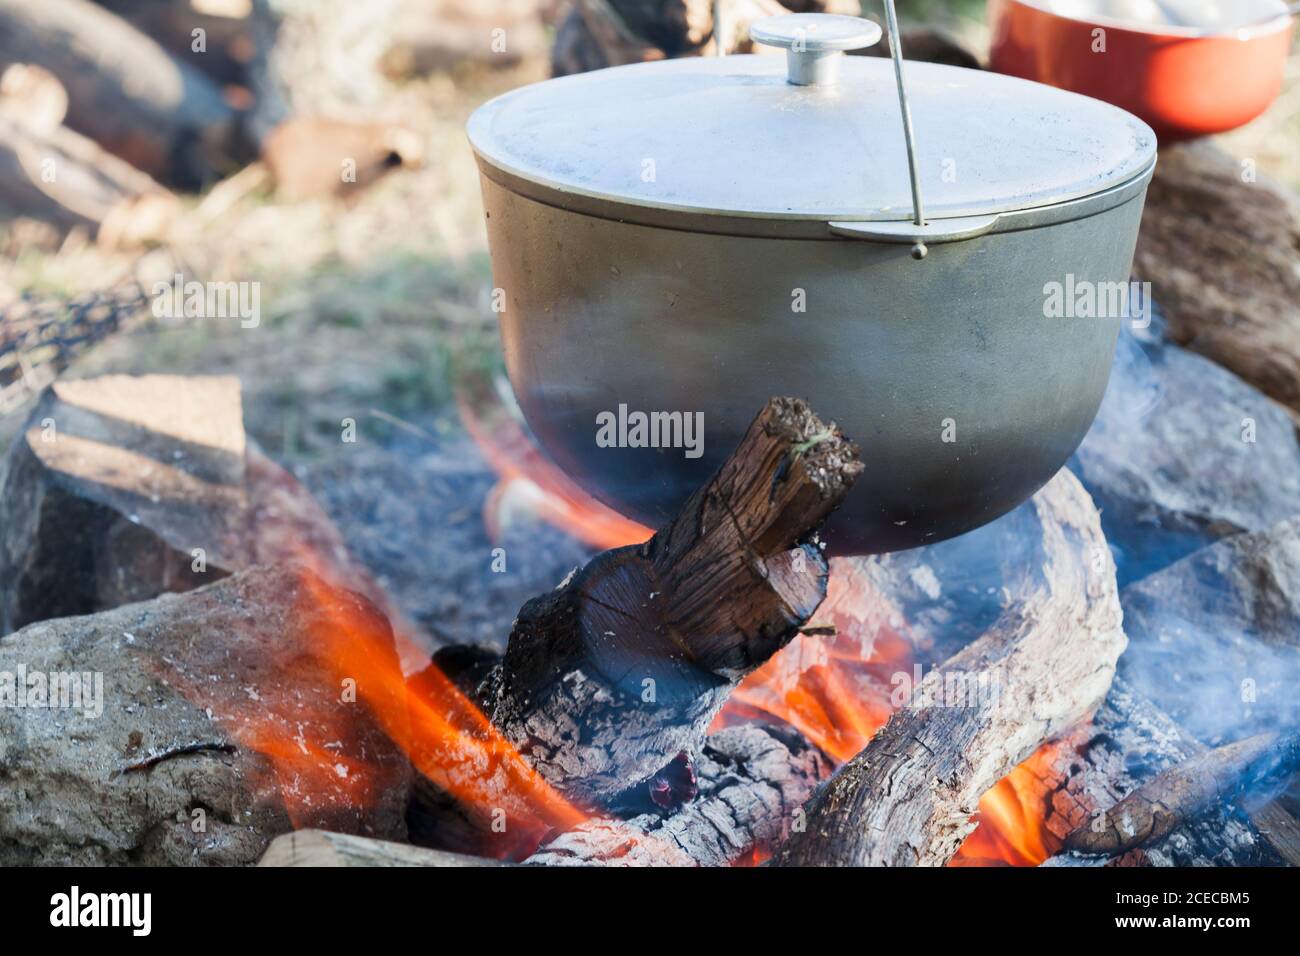 https://c8.alamy.com/comp/2CECBM5/bonfire-and-metal-cauldron-cooking-on-open-fire-camping-meal-2CECBM5.jpg